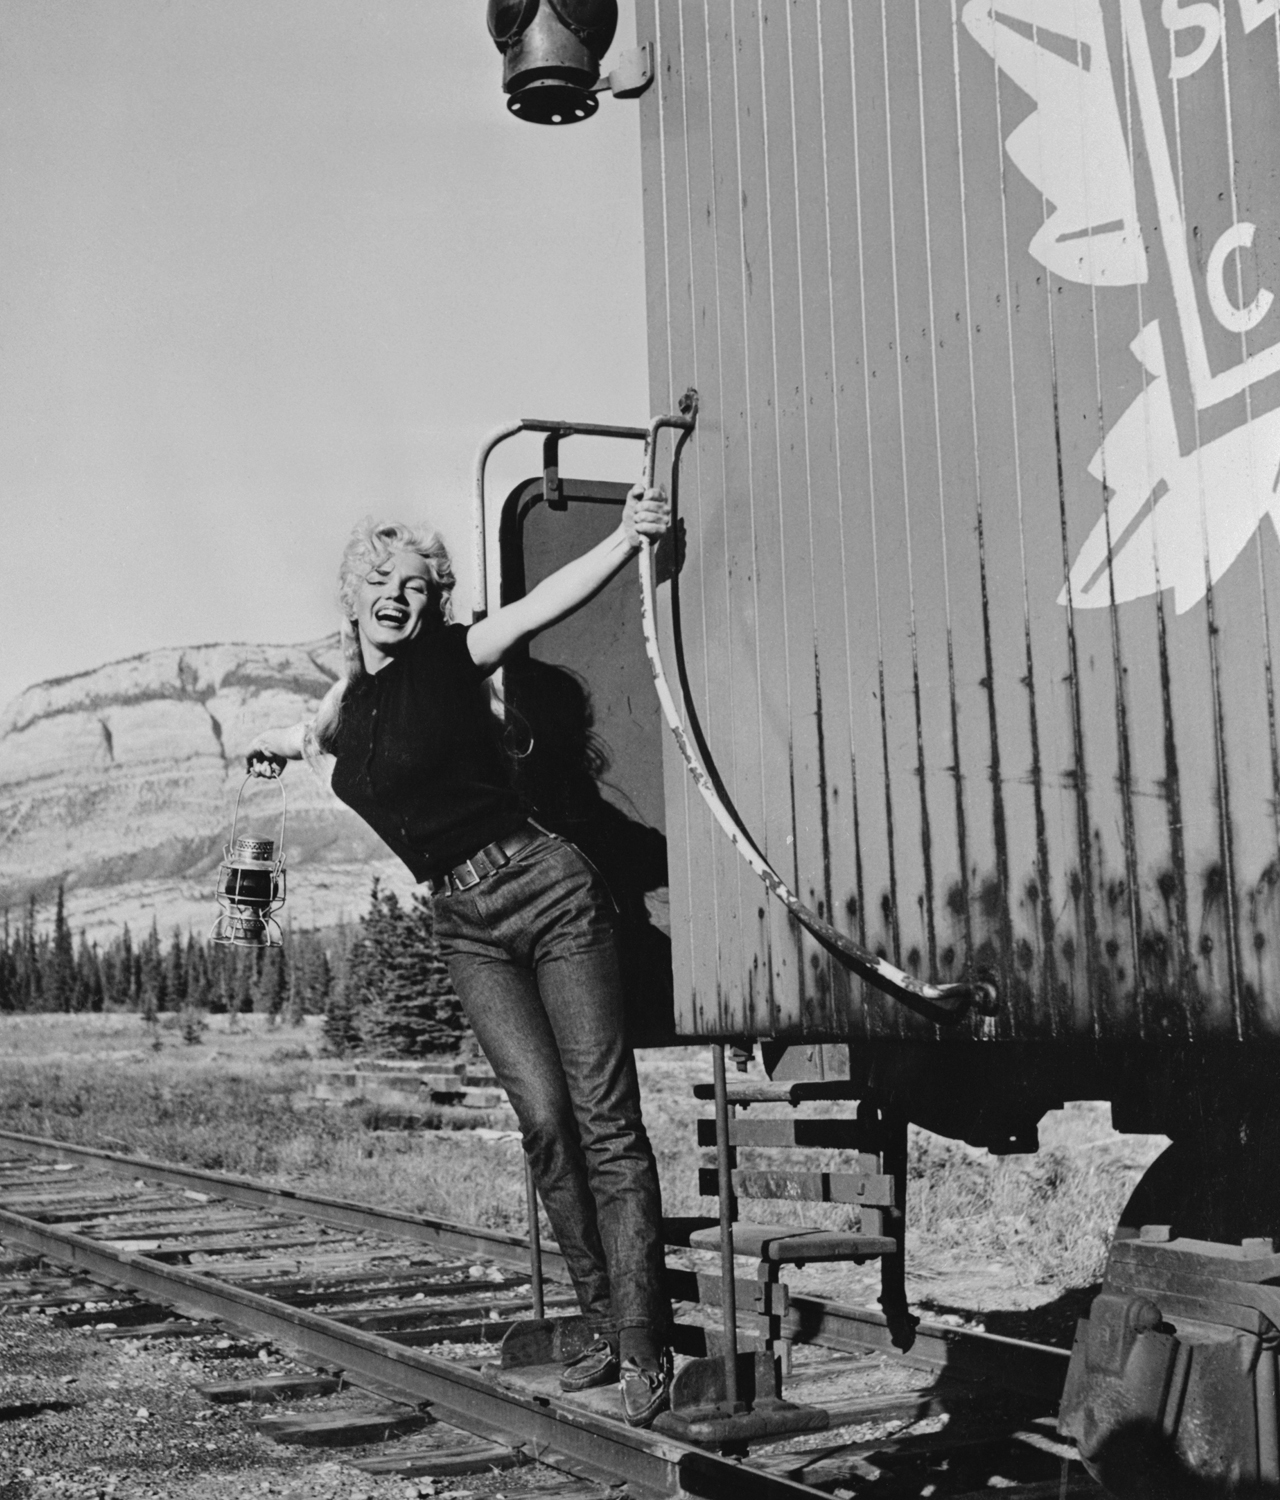 Monroe aboard the Million Dollar Special train in August 1953.